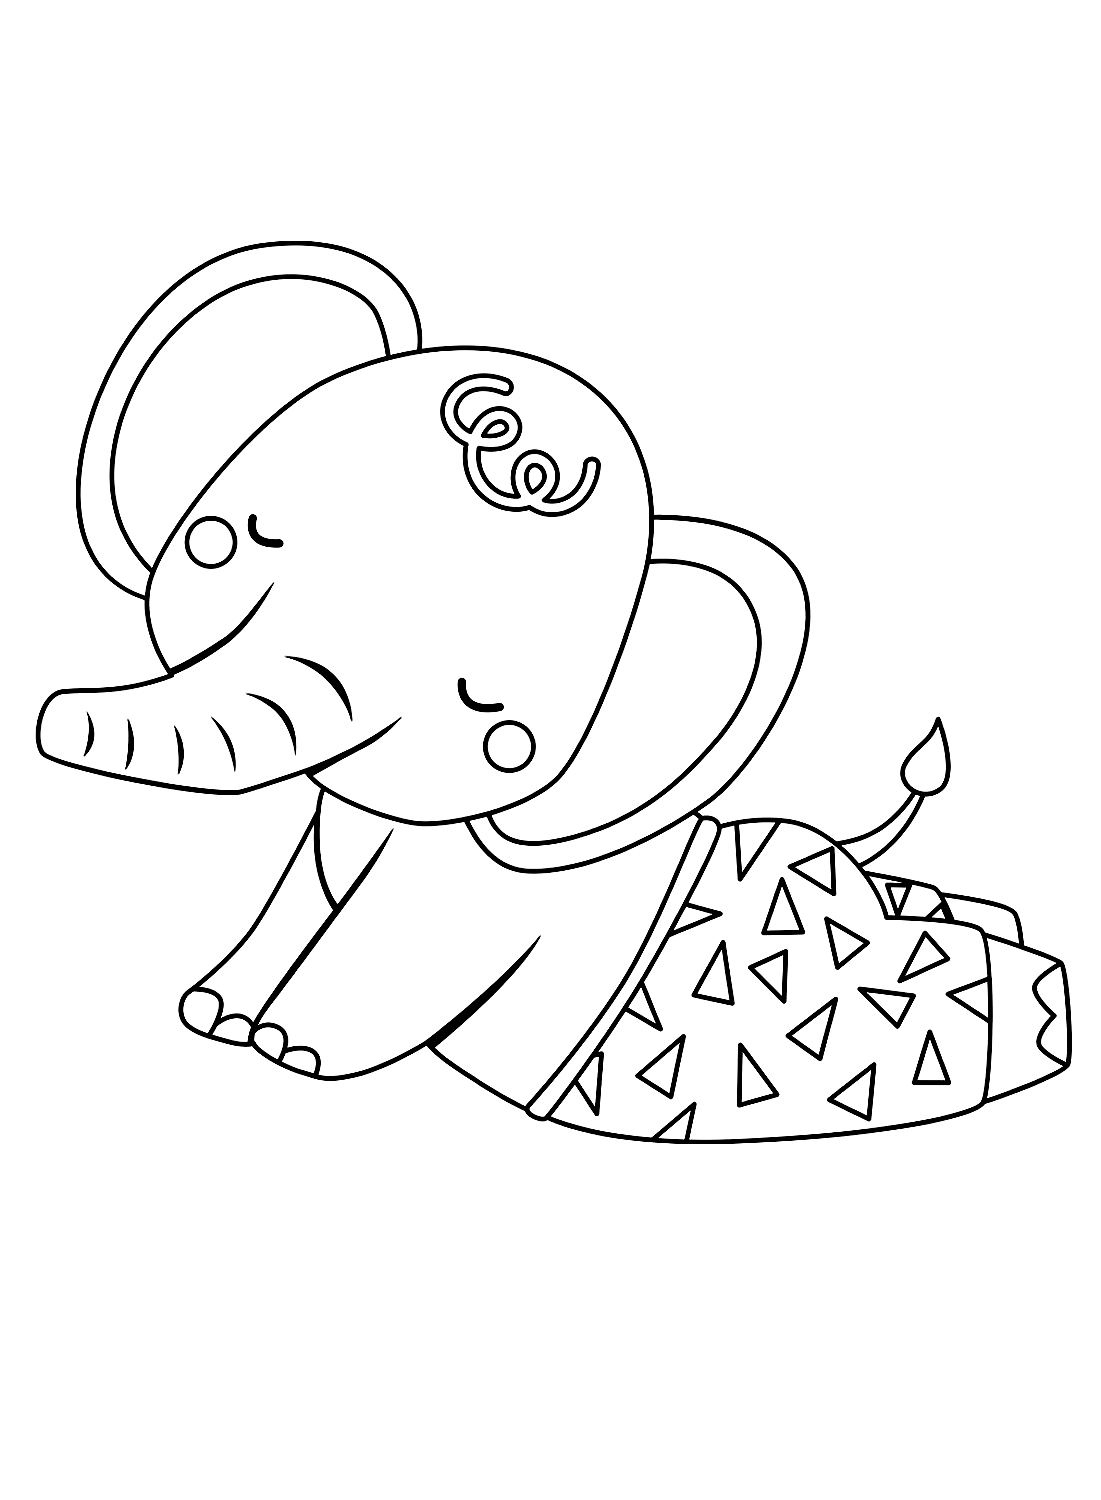 Sleeping Elephant coloring